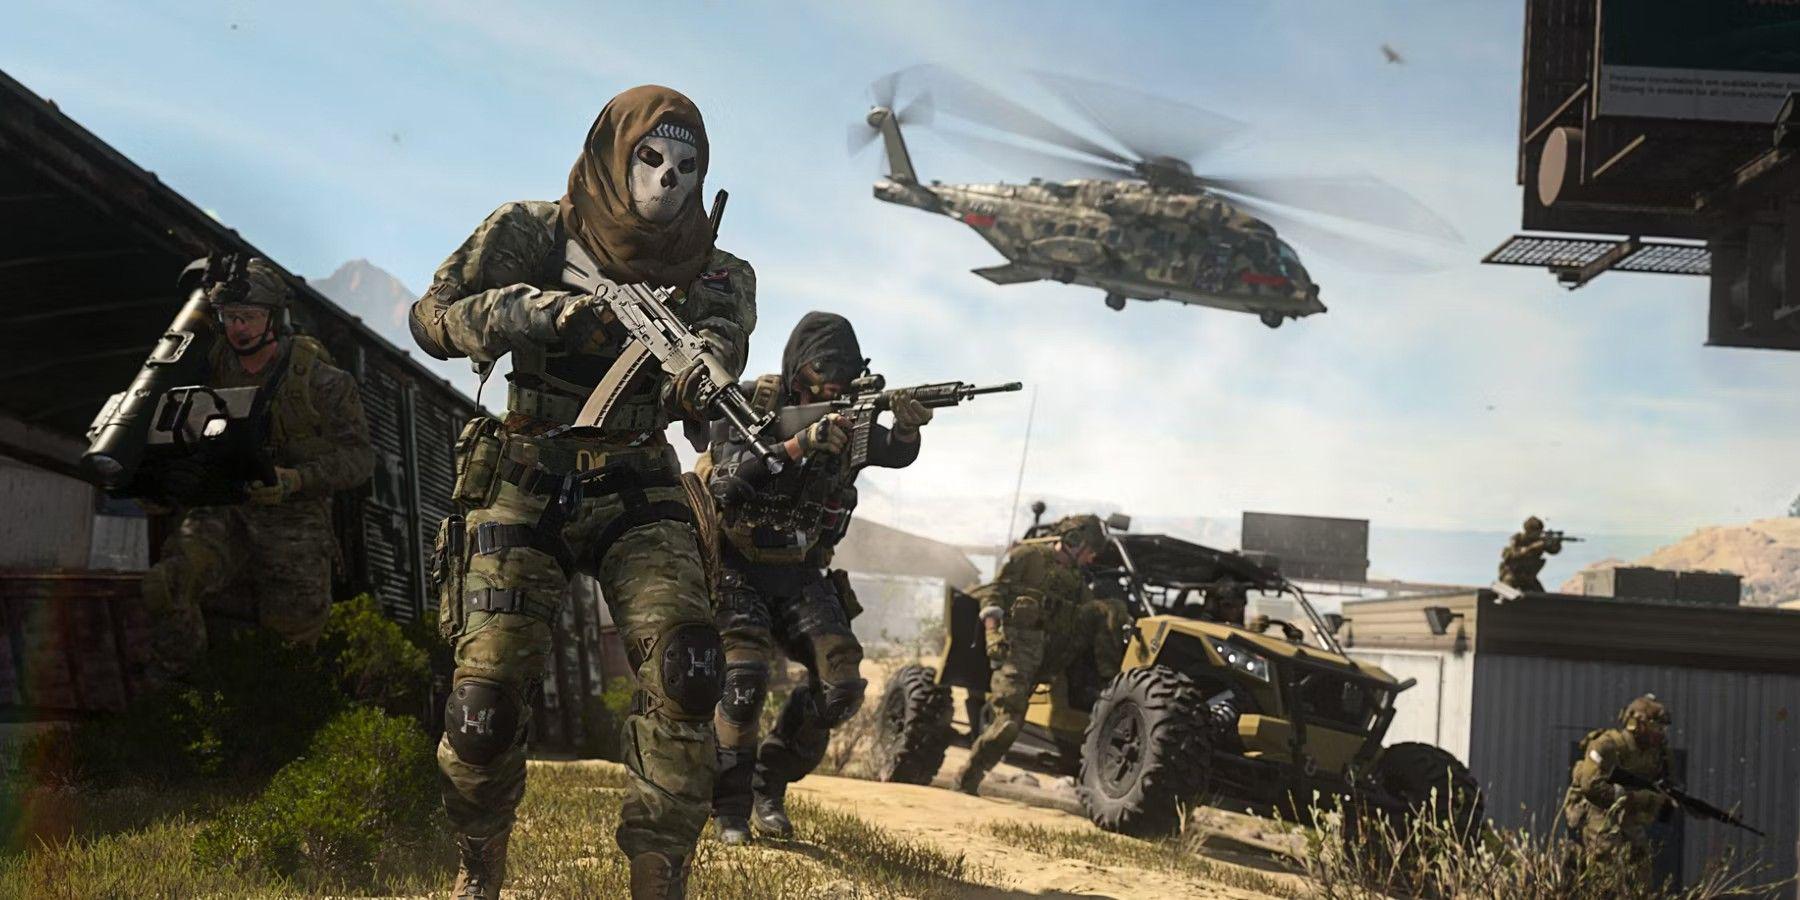 Call of Duty precisa parar de deixar seu multijogador pago em segundo lugar para Warzone